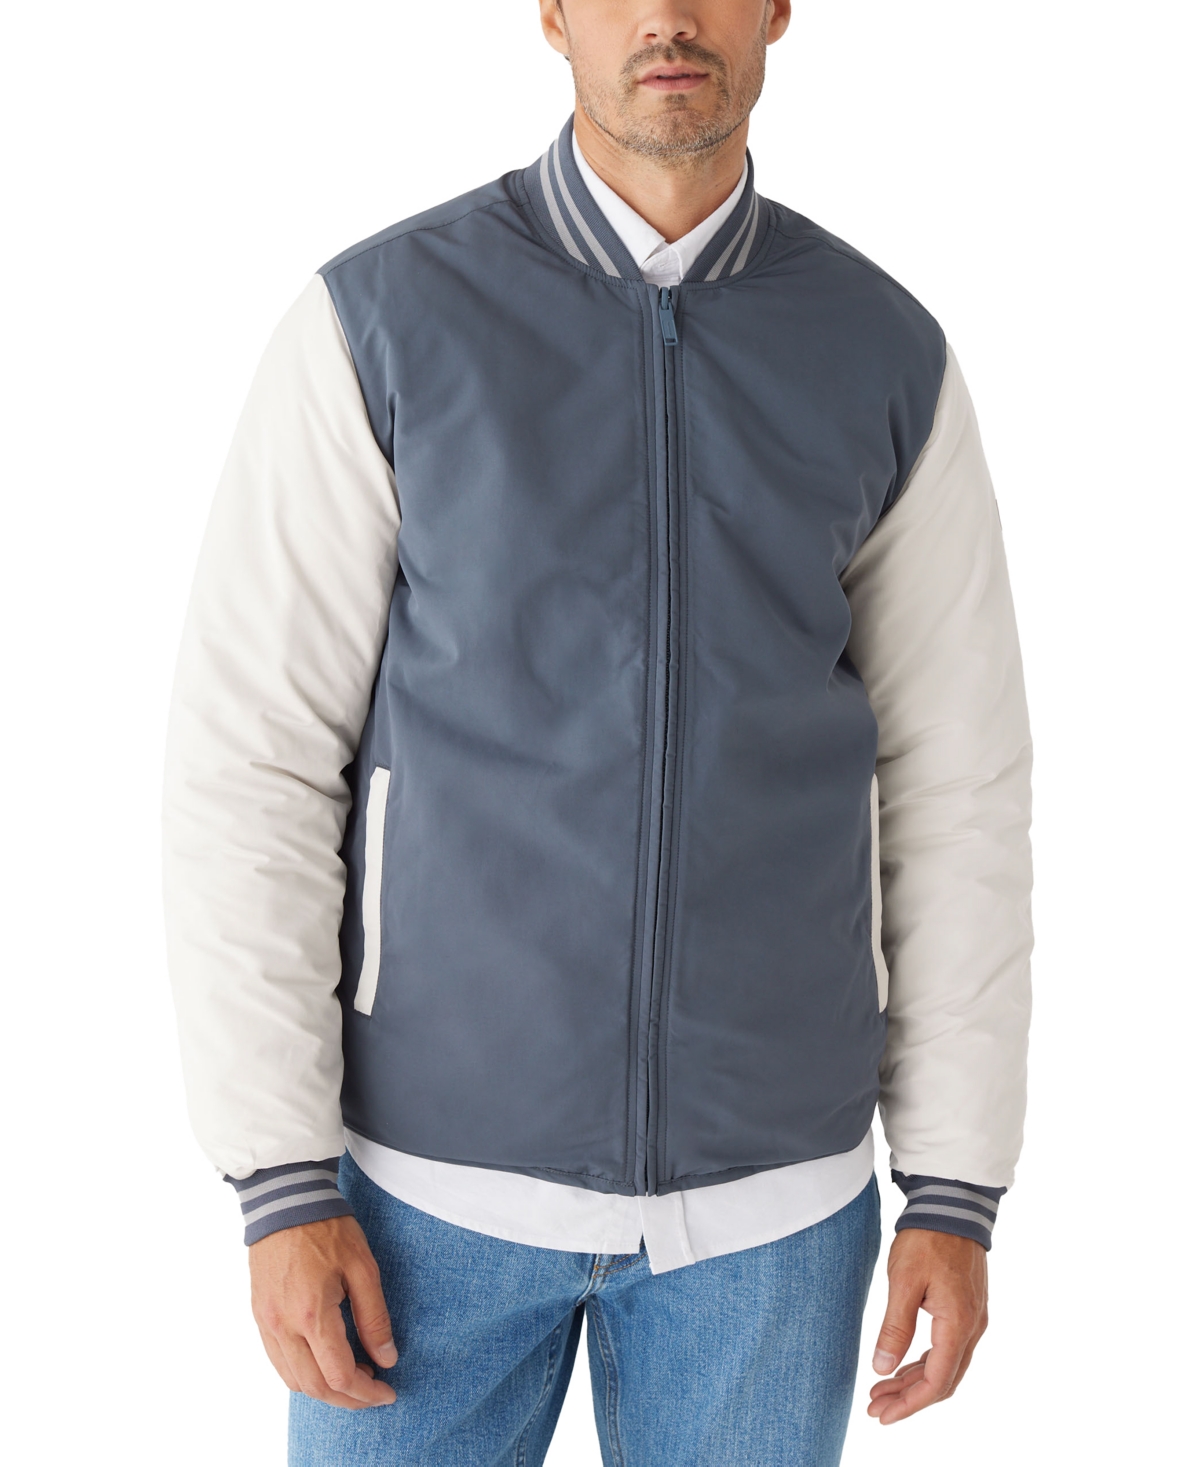 Men's Skyline Reversible Weather-Resistant Varsity Jacket - Ombre Blue